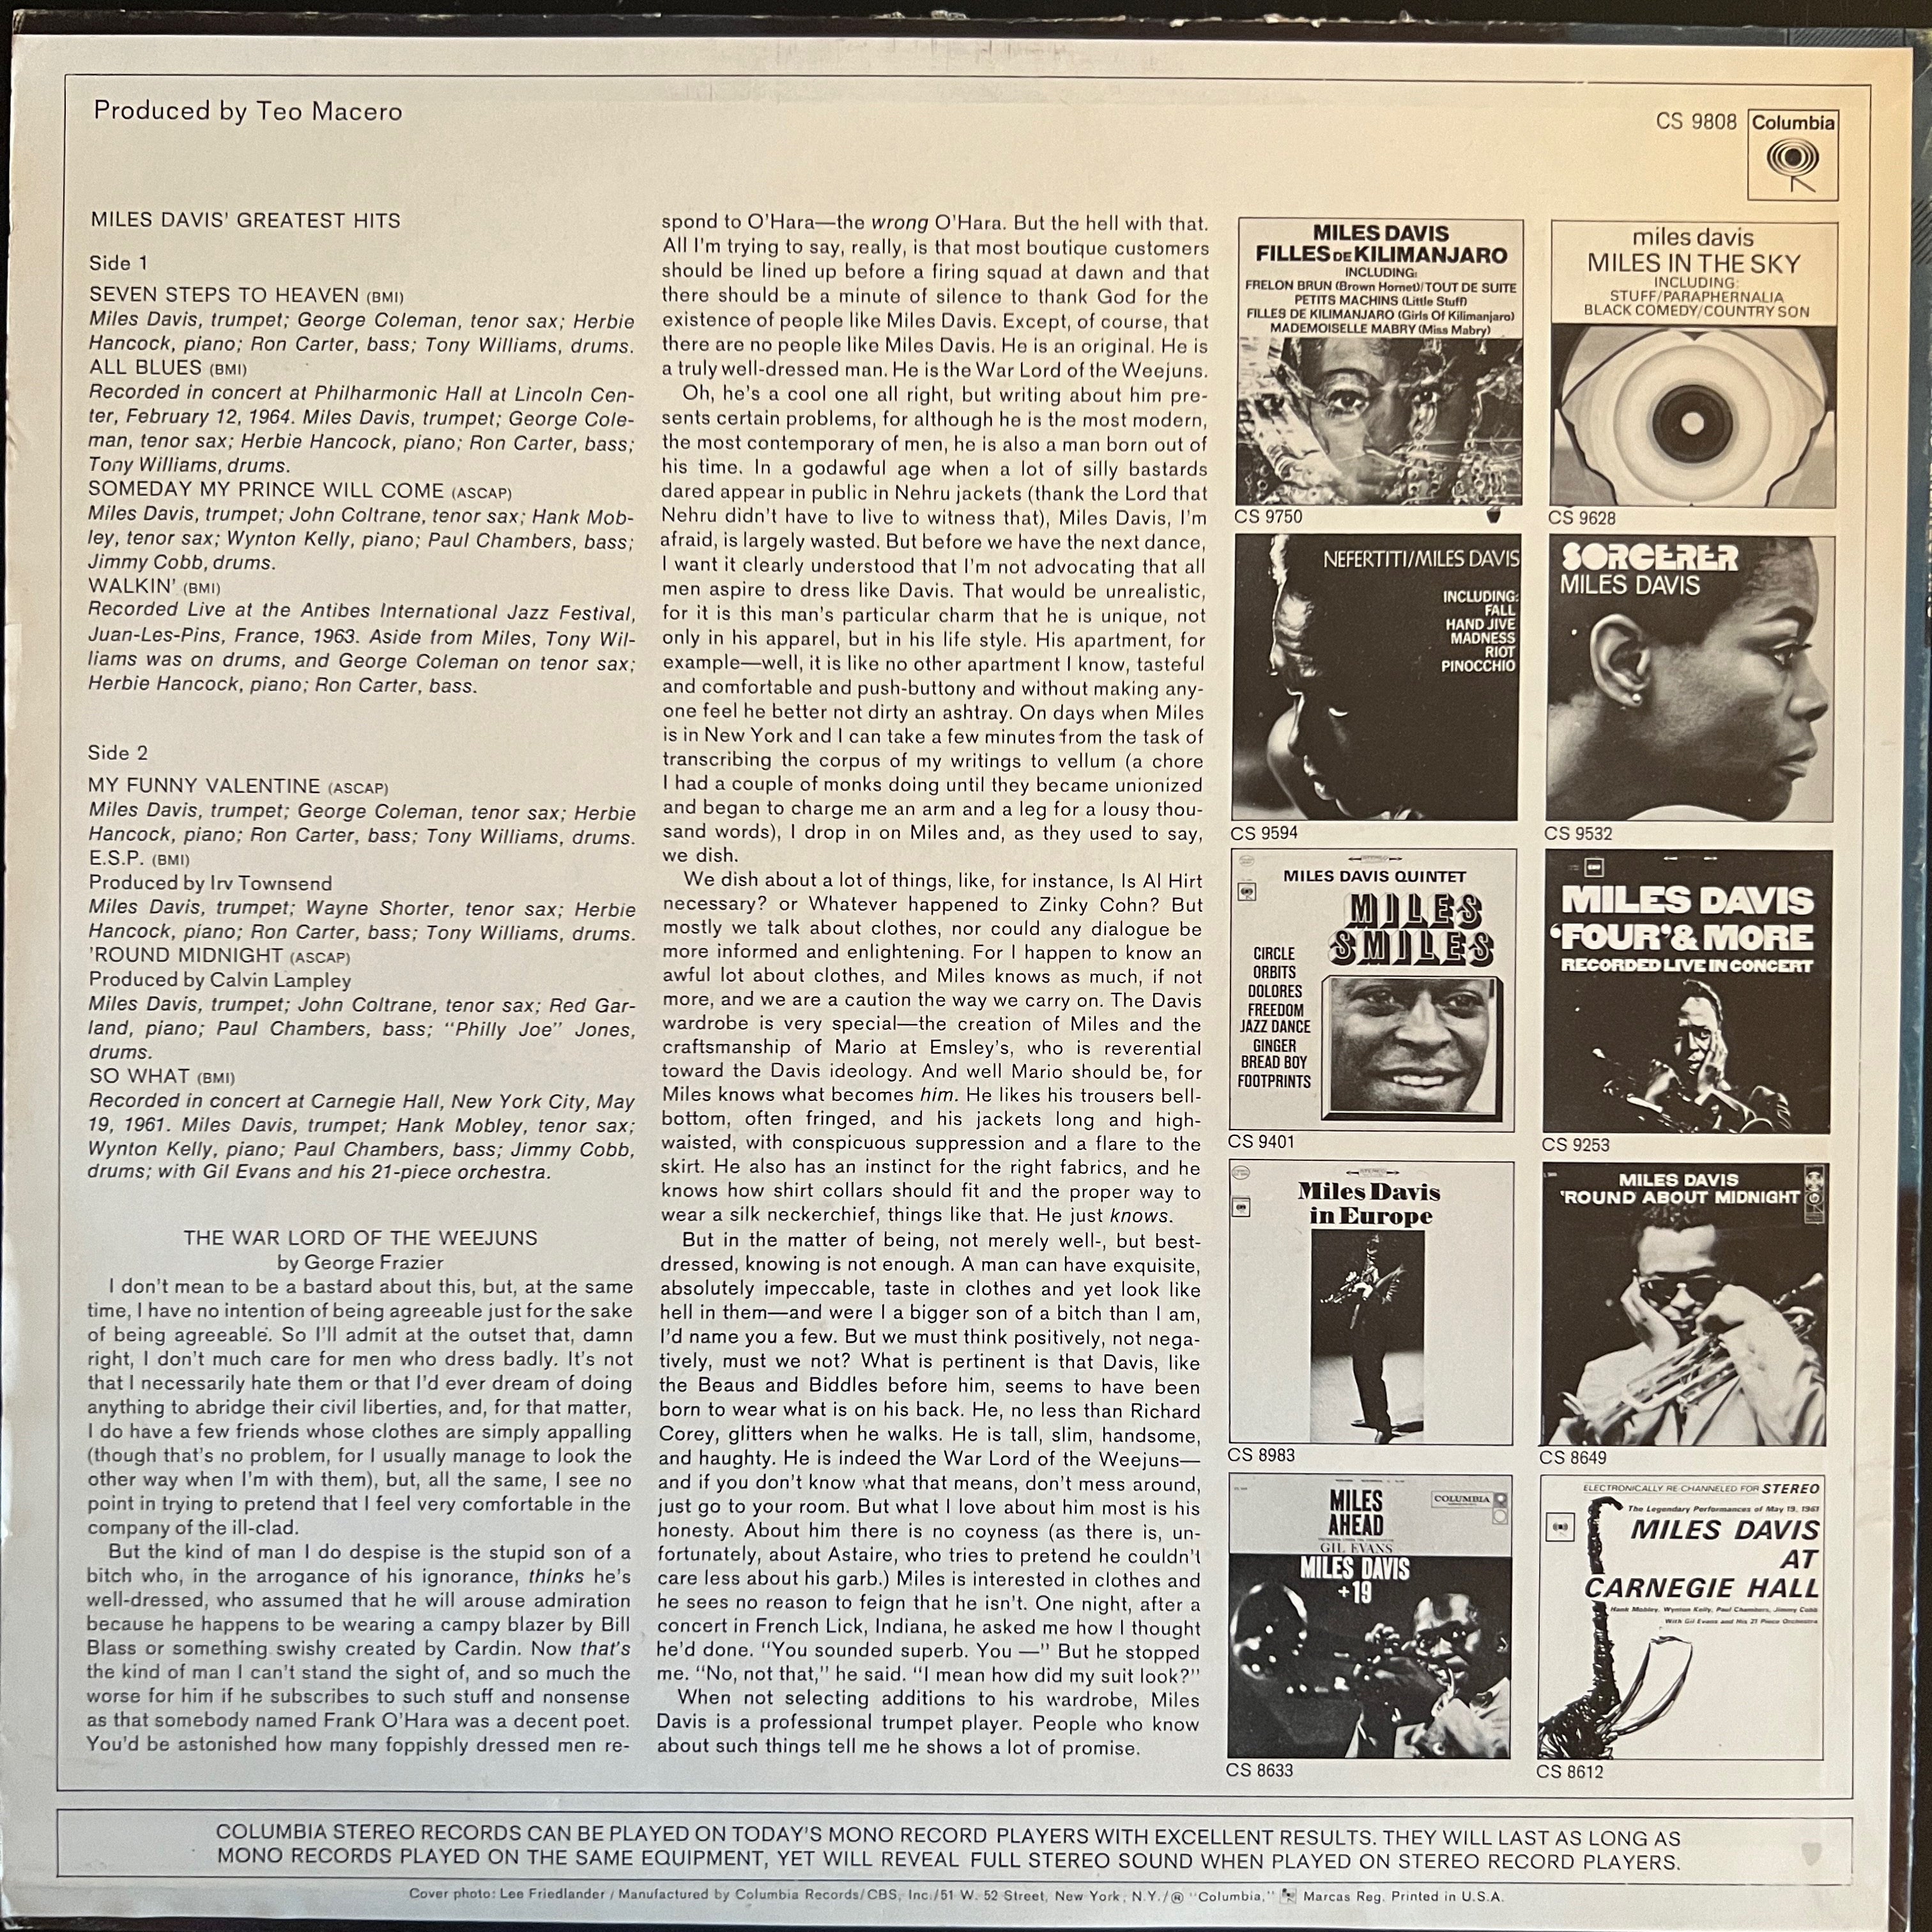 Miles Davis - Greatest Hits Vinyl LP (Columbia, Santa Maria Pressing CS9809) VG+